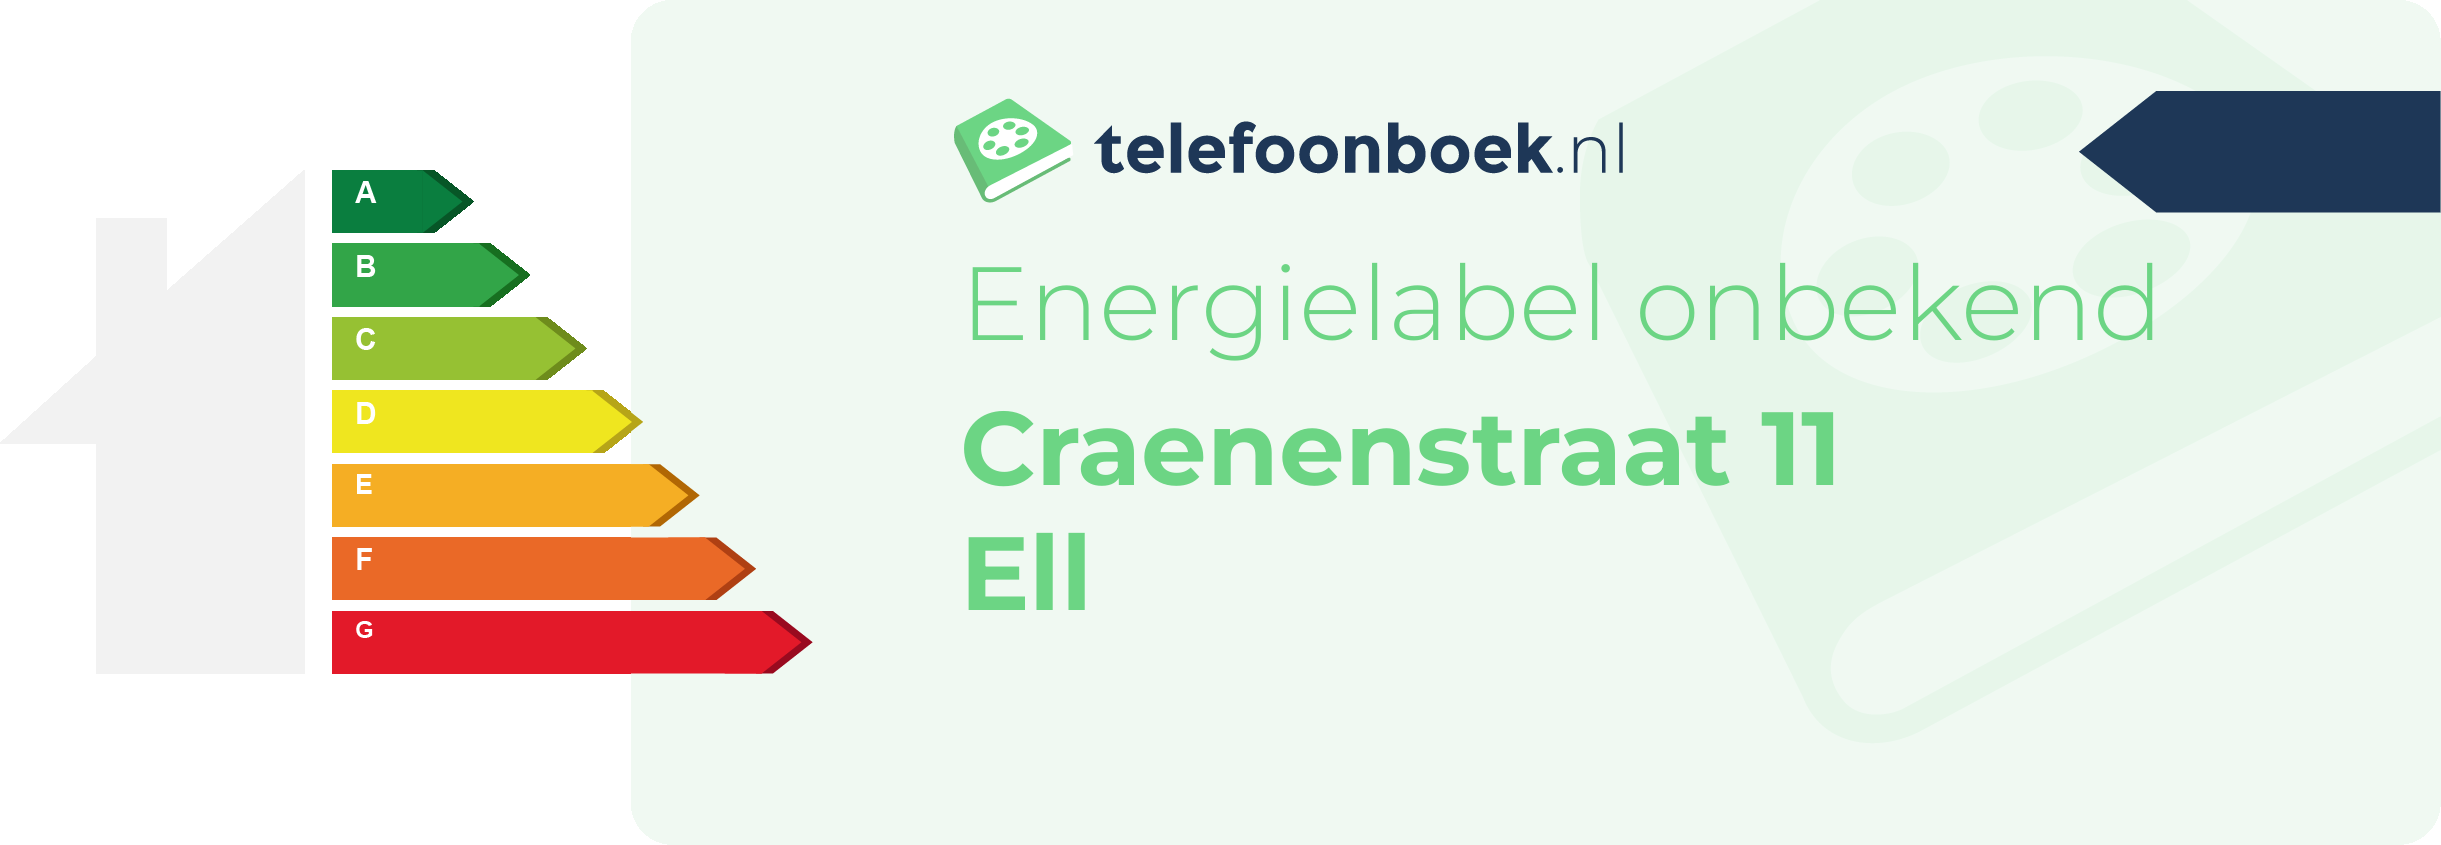 Energielabel Craenenstraat 11 Ell